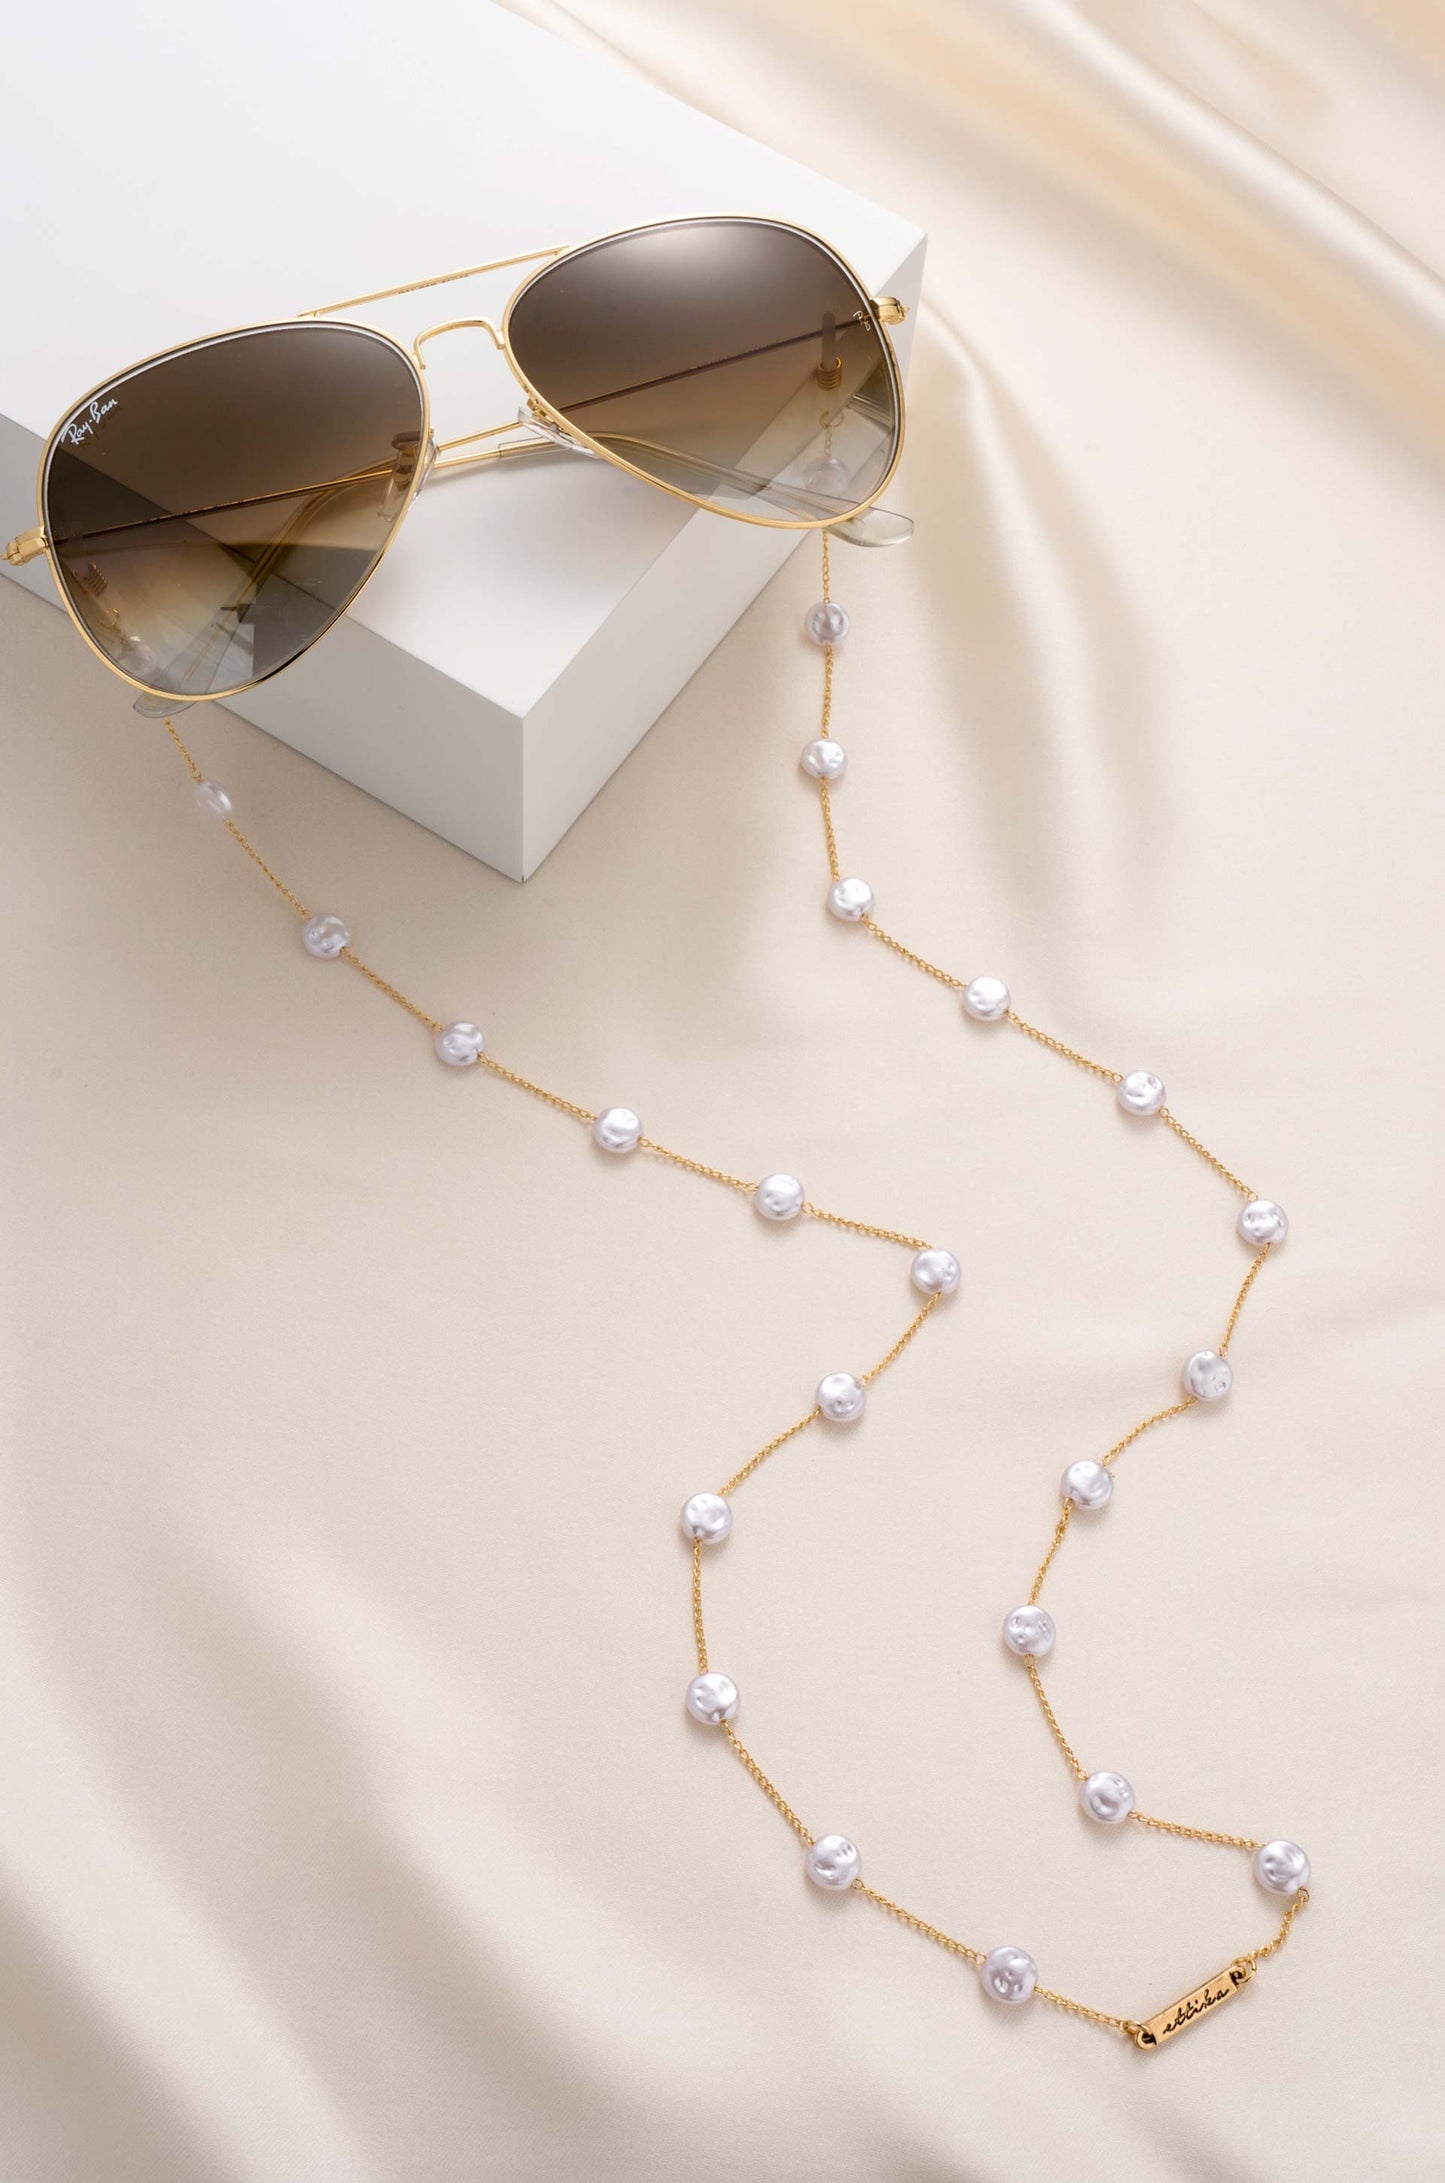 Mermaid Coin Pearls Glasses Chain on slate